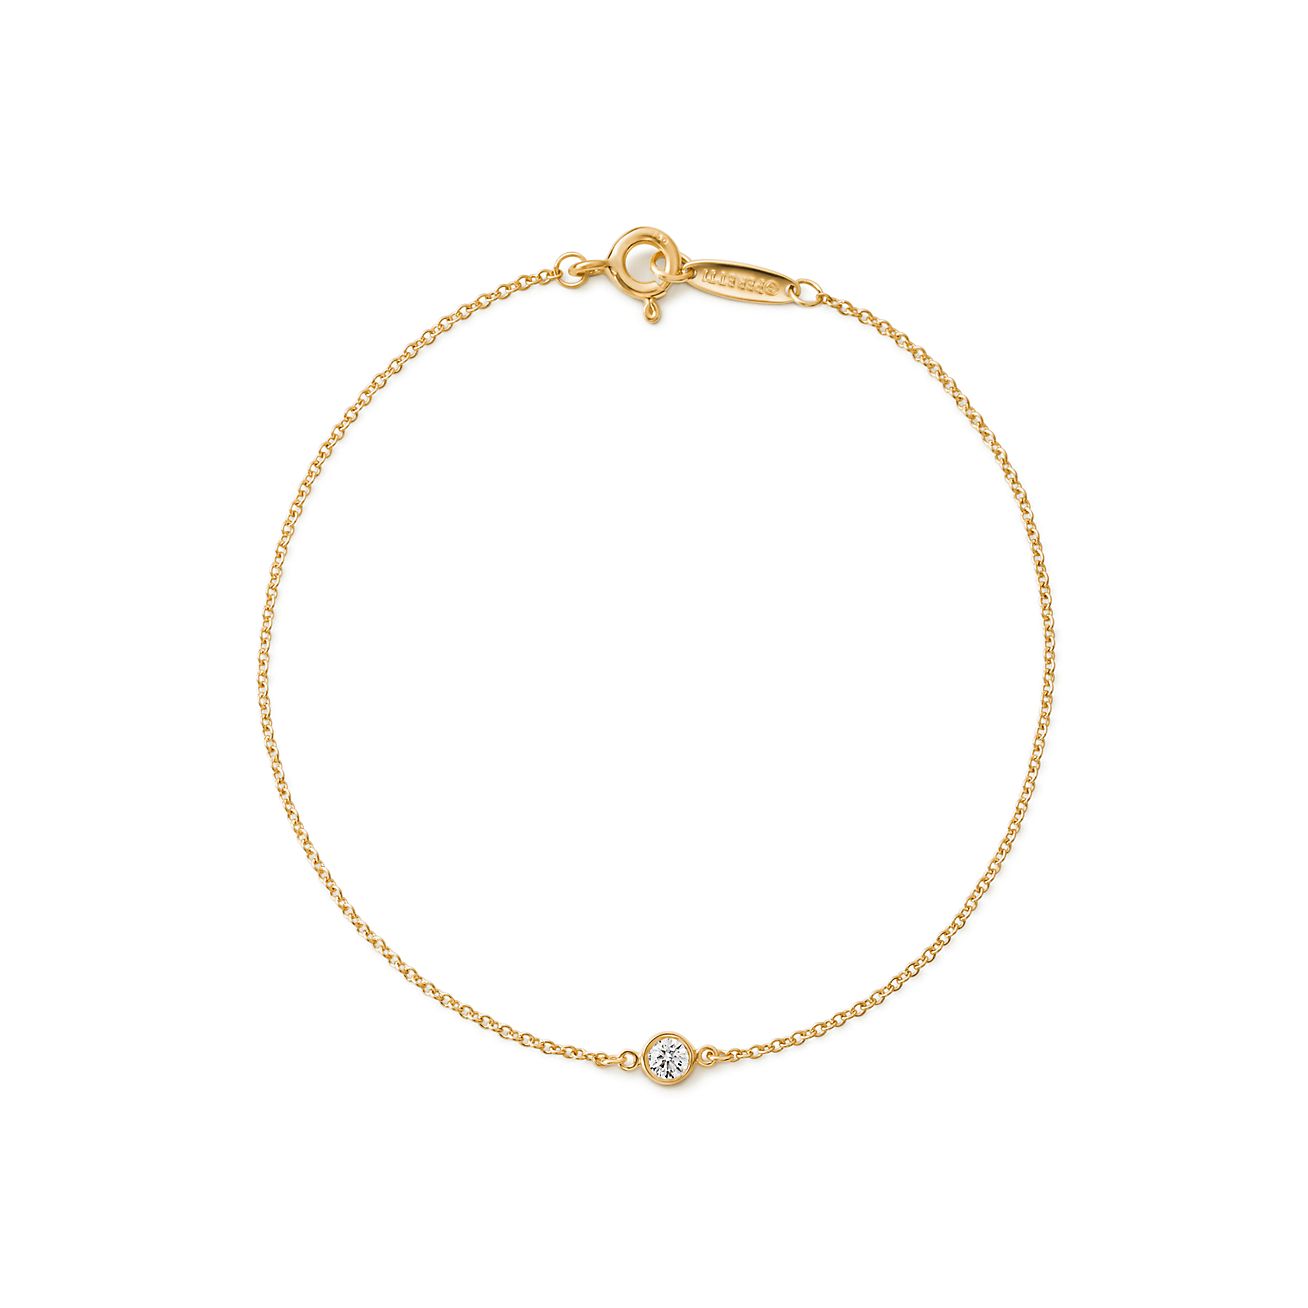 Elsa Peretti®Diamonds by the Yard® Single Diamond Bracelet
in Yellow Gold